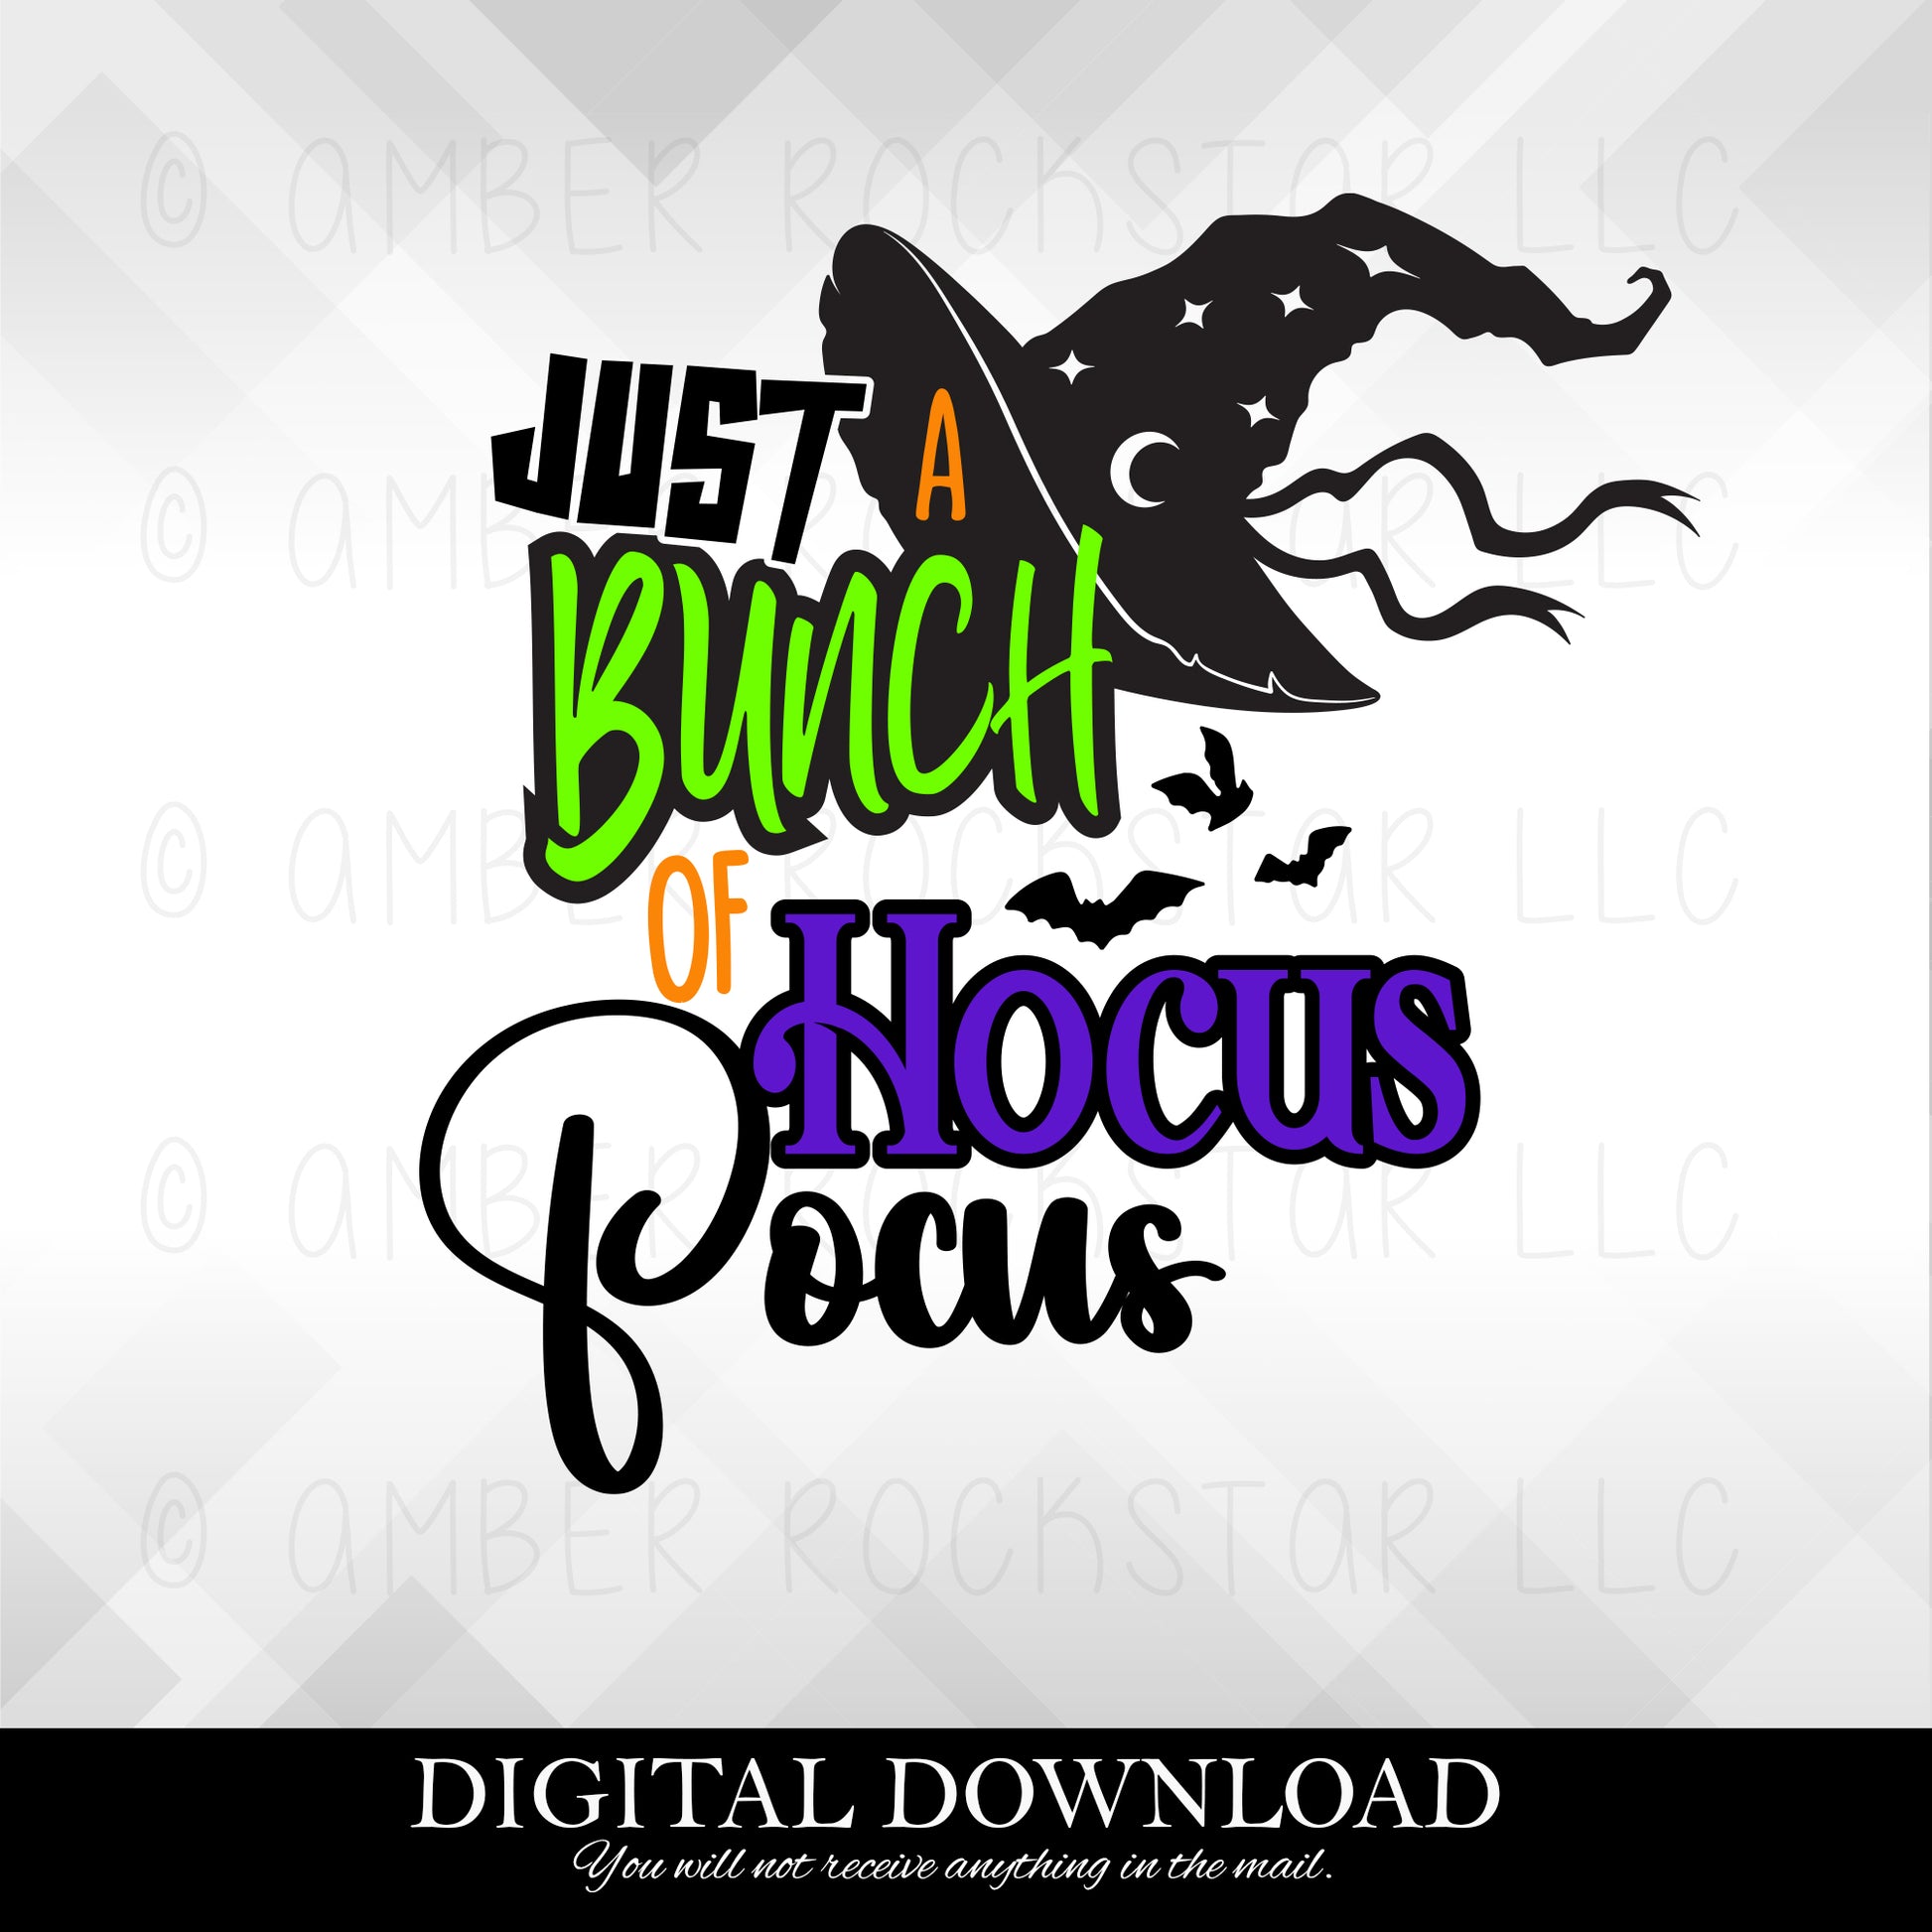 DIGITAL DOWNLOAD: Just a Bunch of Hocus Pocus - Halloween SVG file | Amber Rockstar